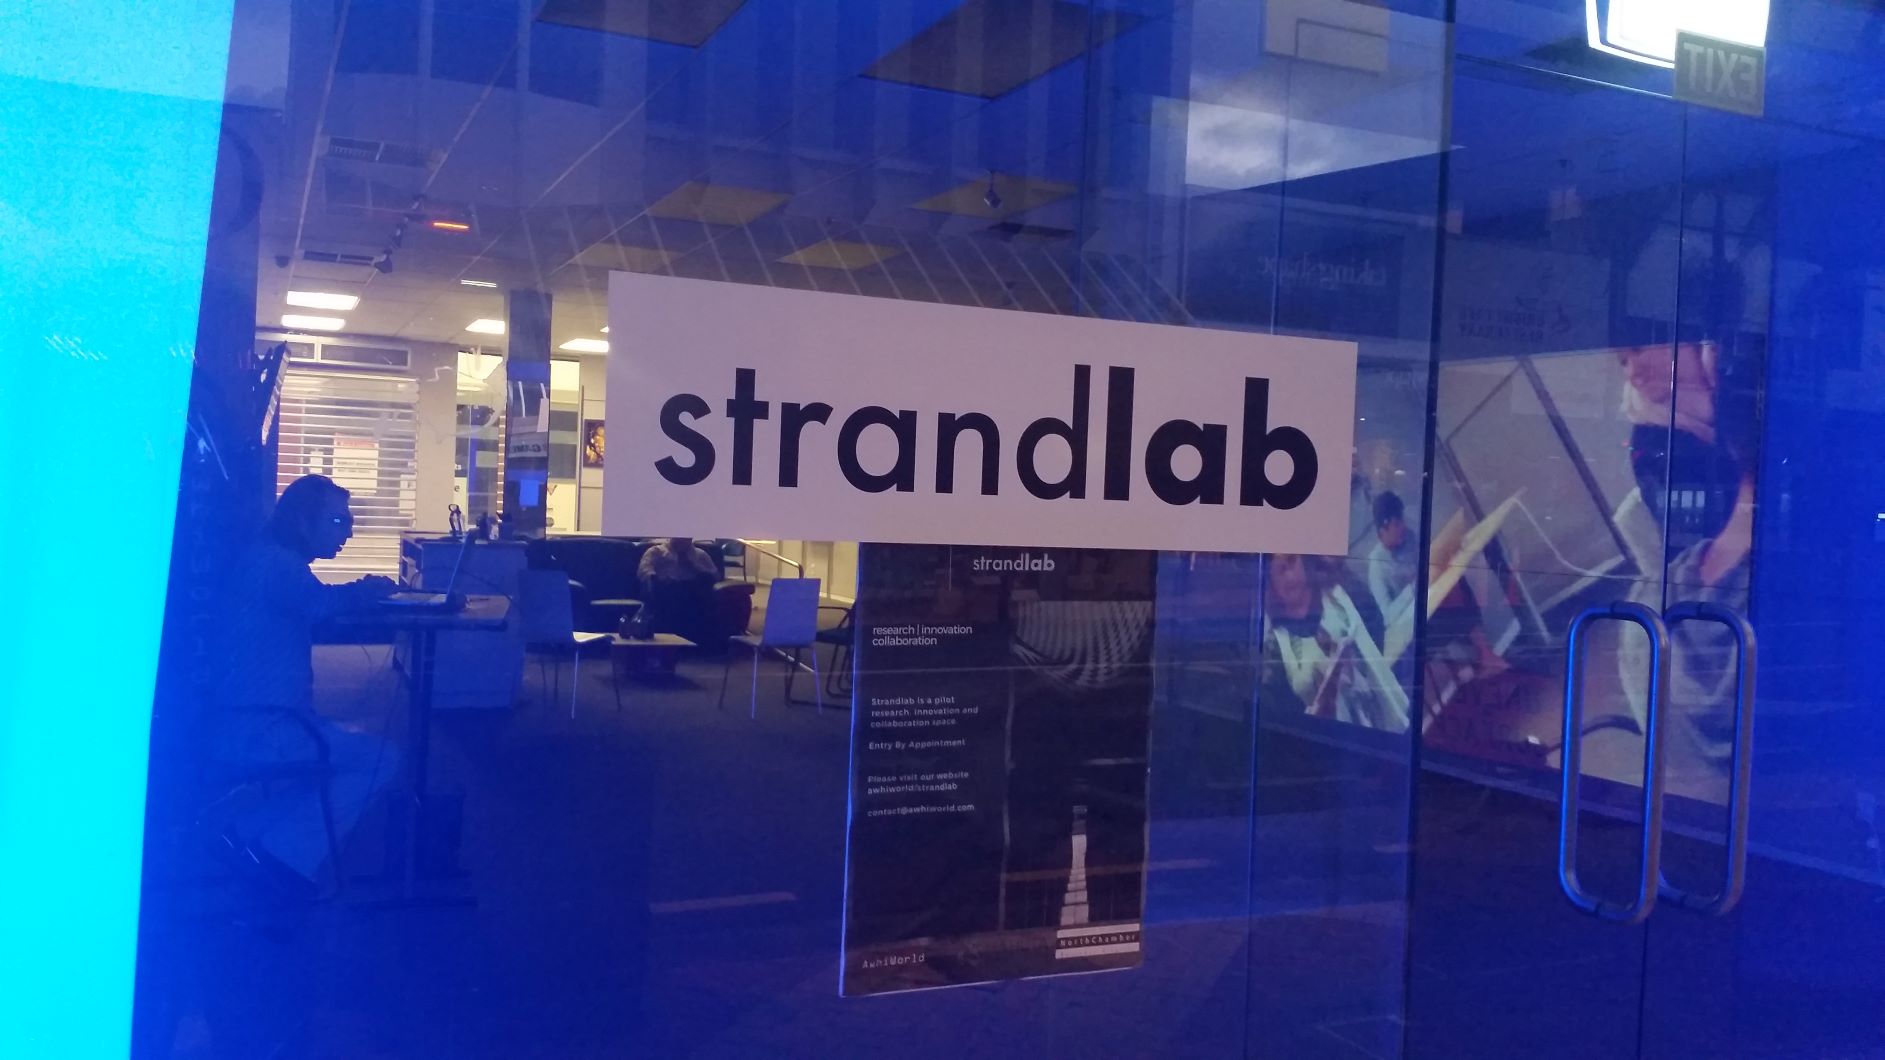 strandlab – research | innovation | collaboration